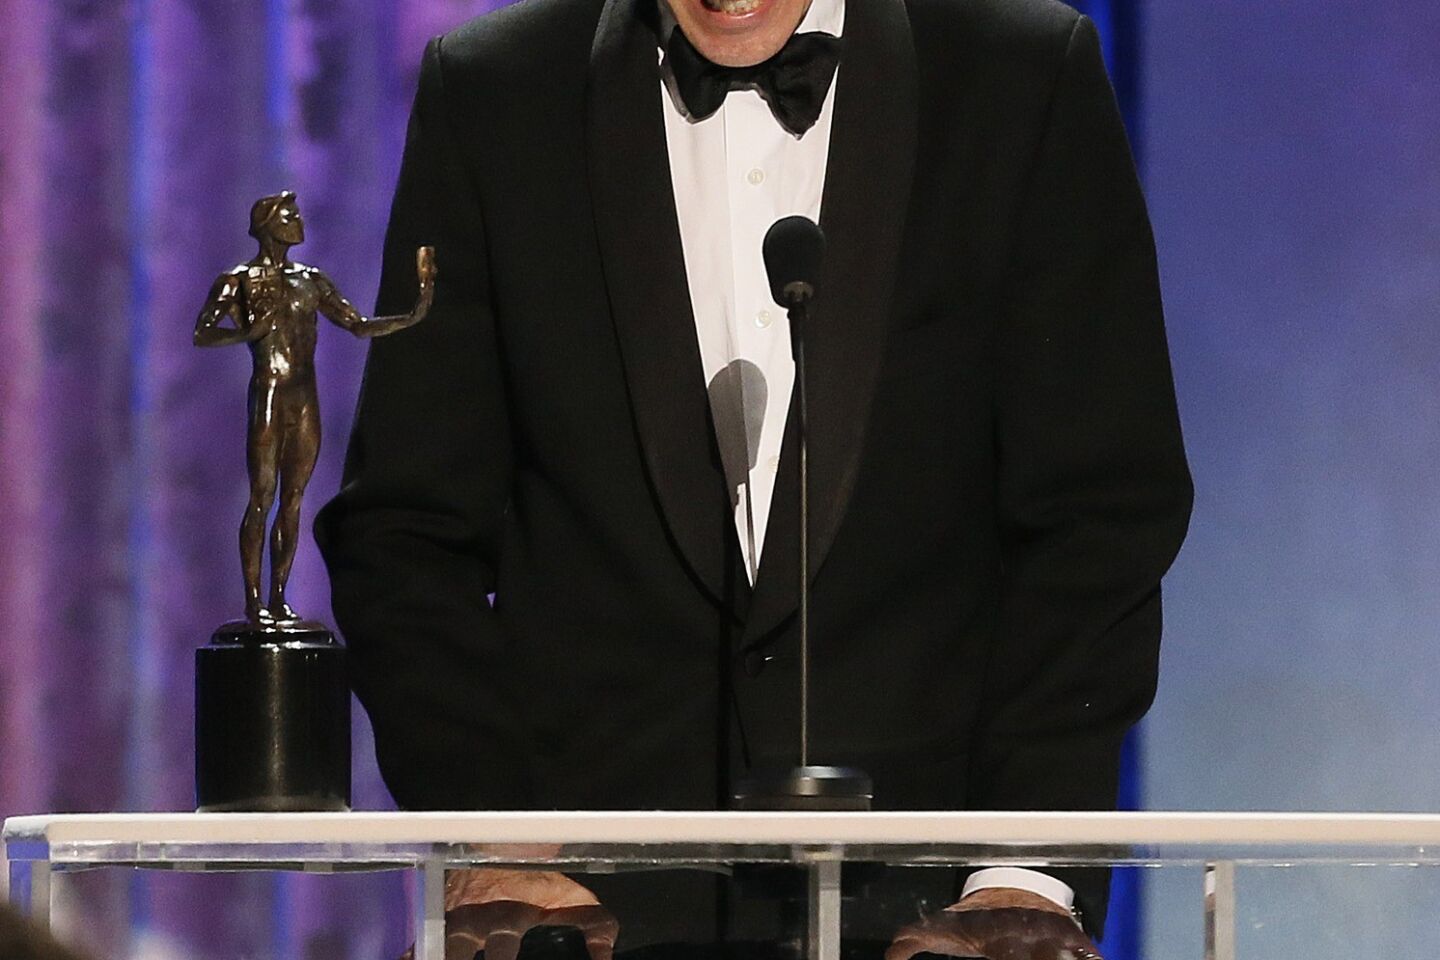 Daniel Day-Lewis gives an award-worthy acceptance speech